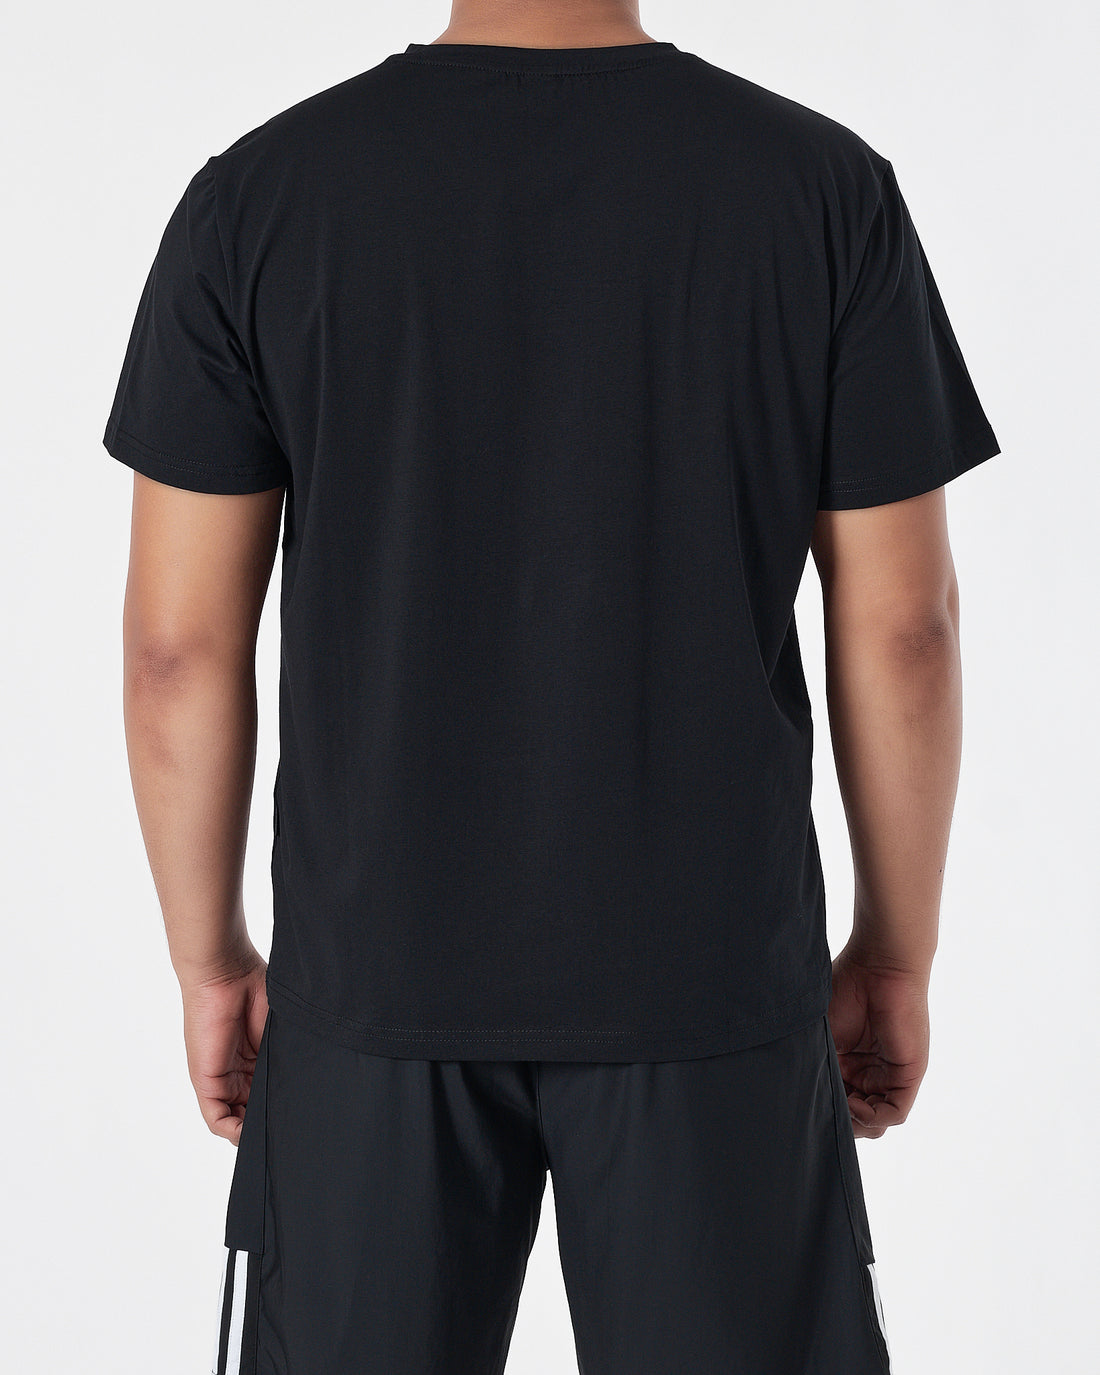 ADI Logo Printed Men Black T-Shirt 13.90